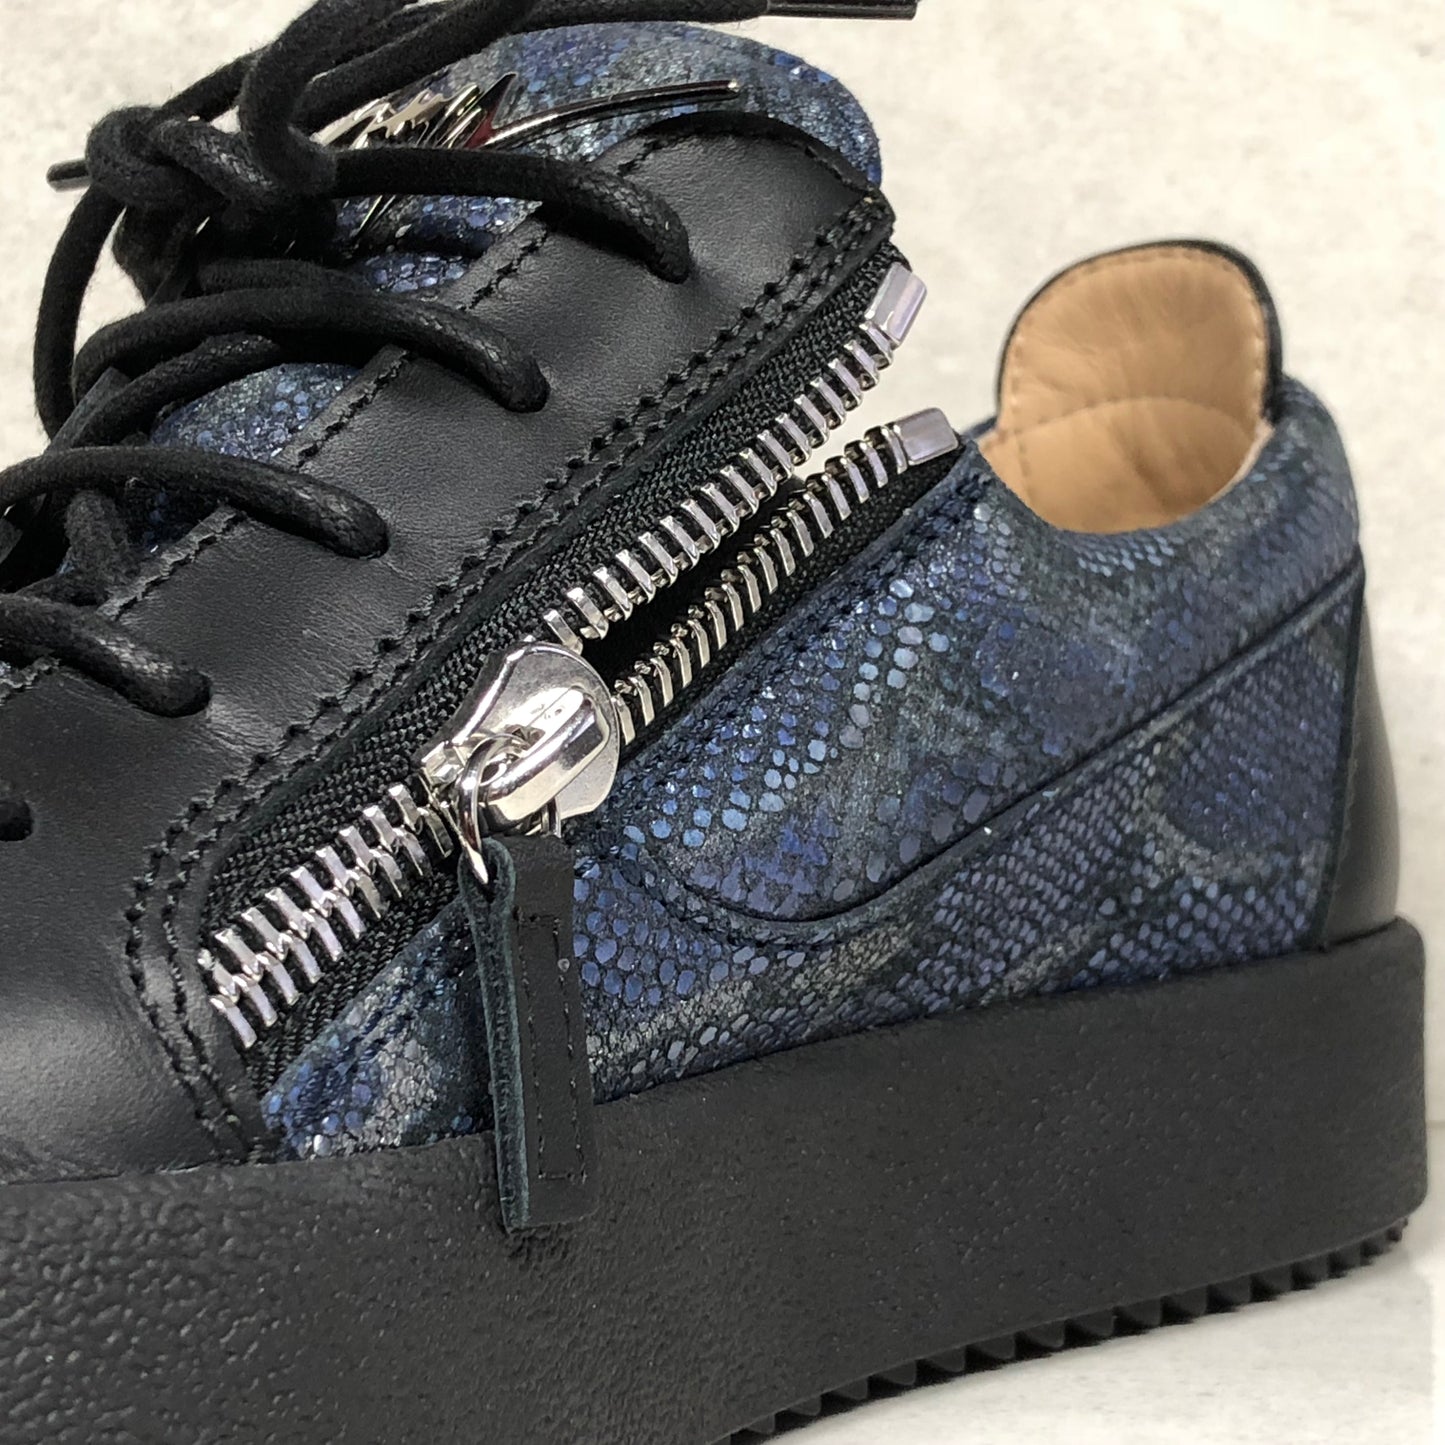 Giuseppe Zanotti Double Zip Sneakers Size 7 May Lond Black/Navy Blue Snakeskin